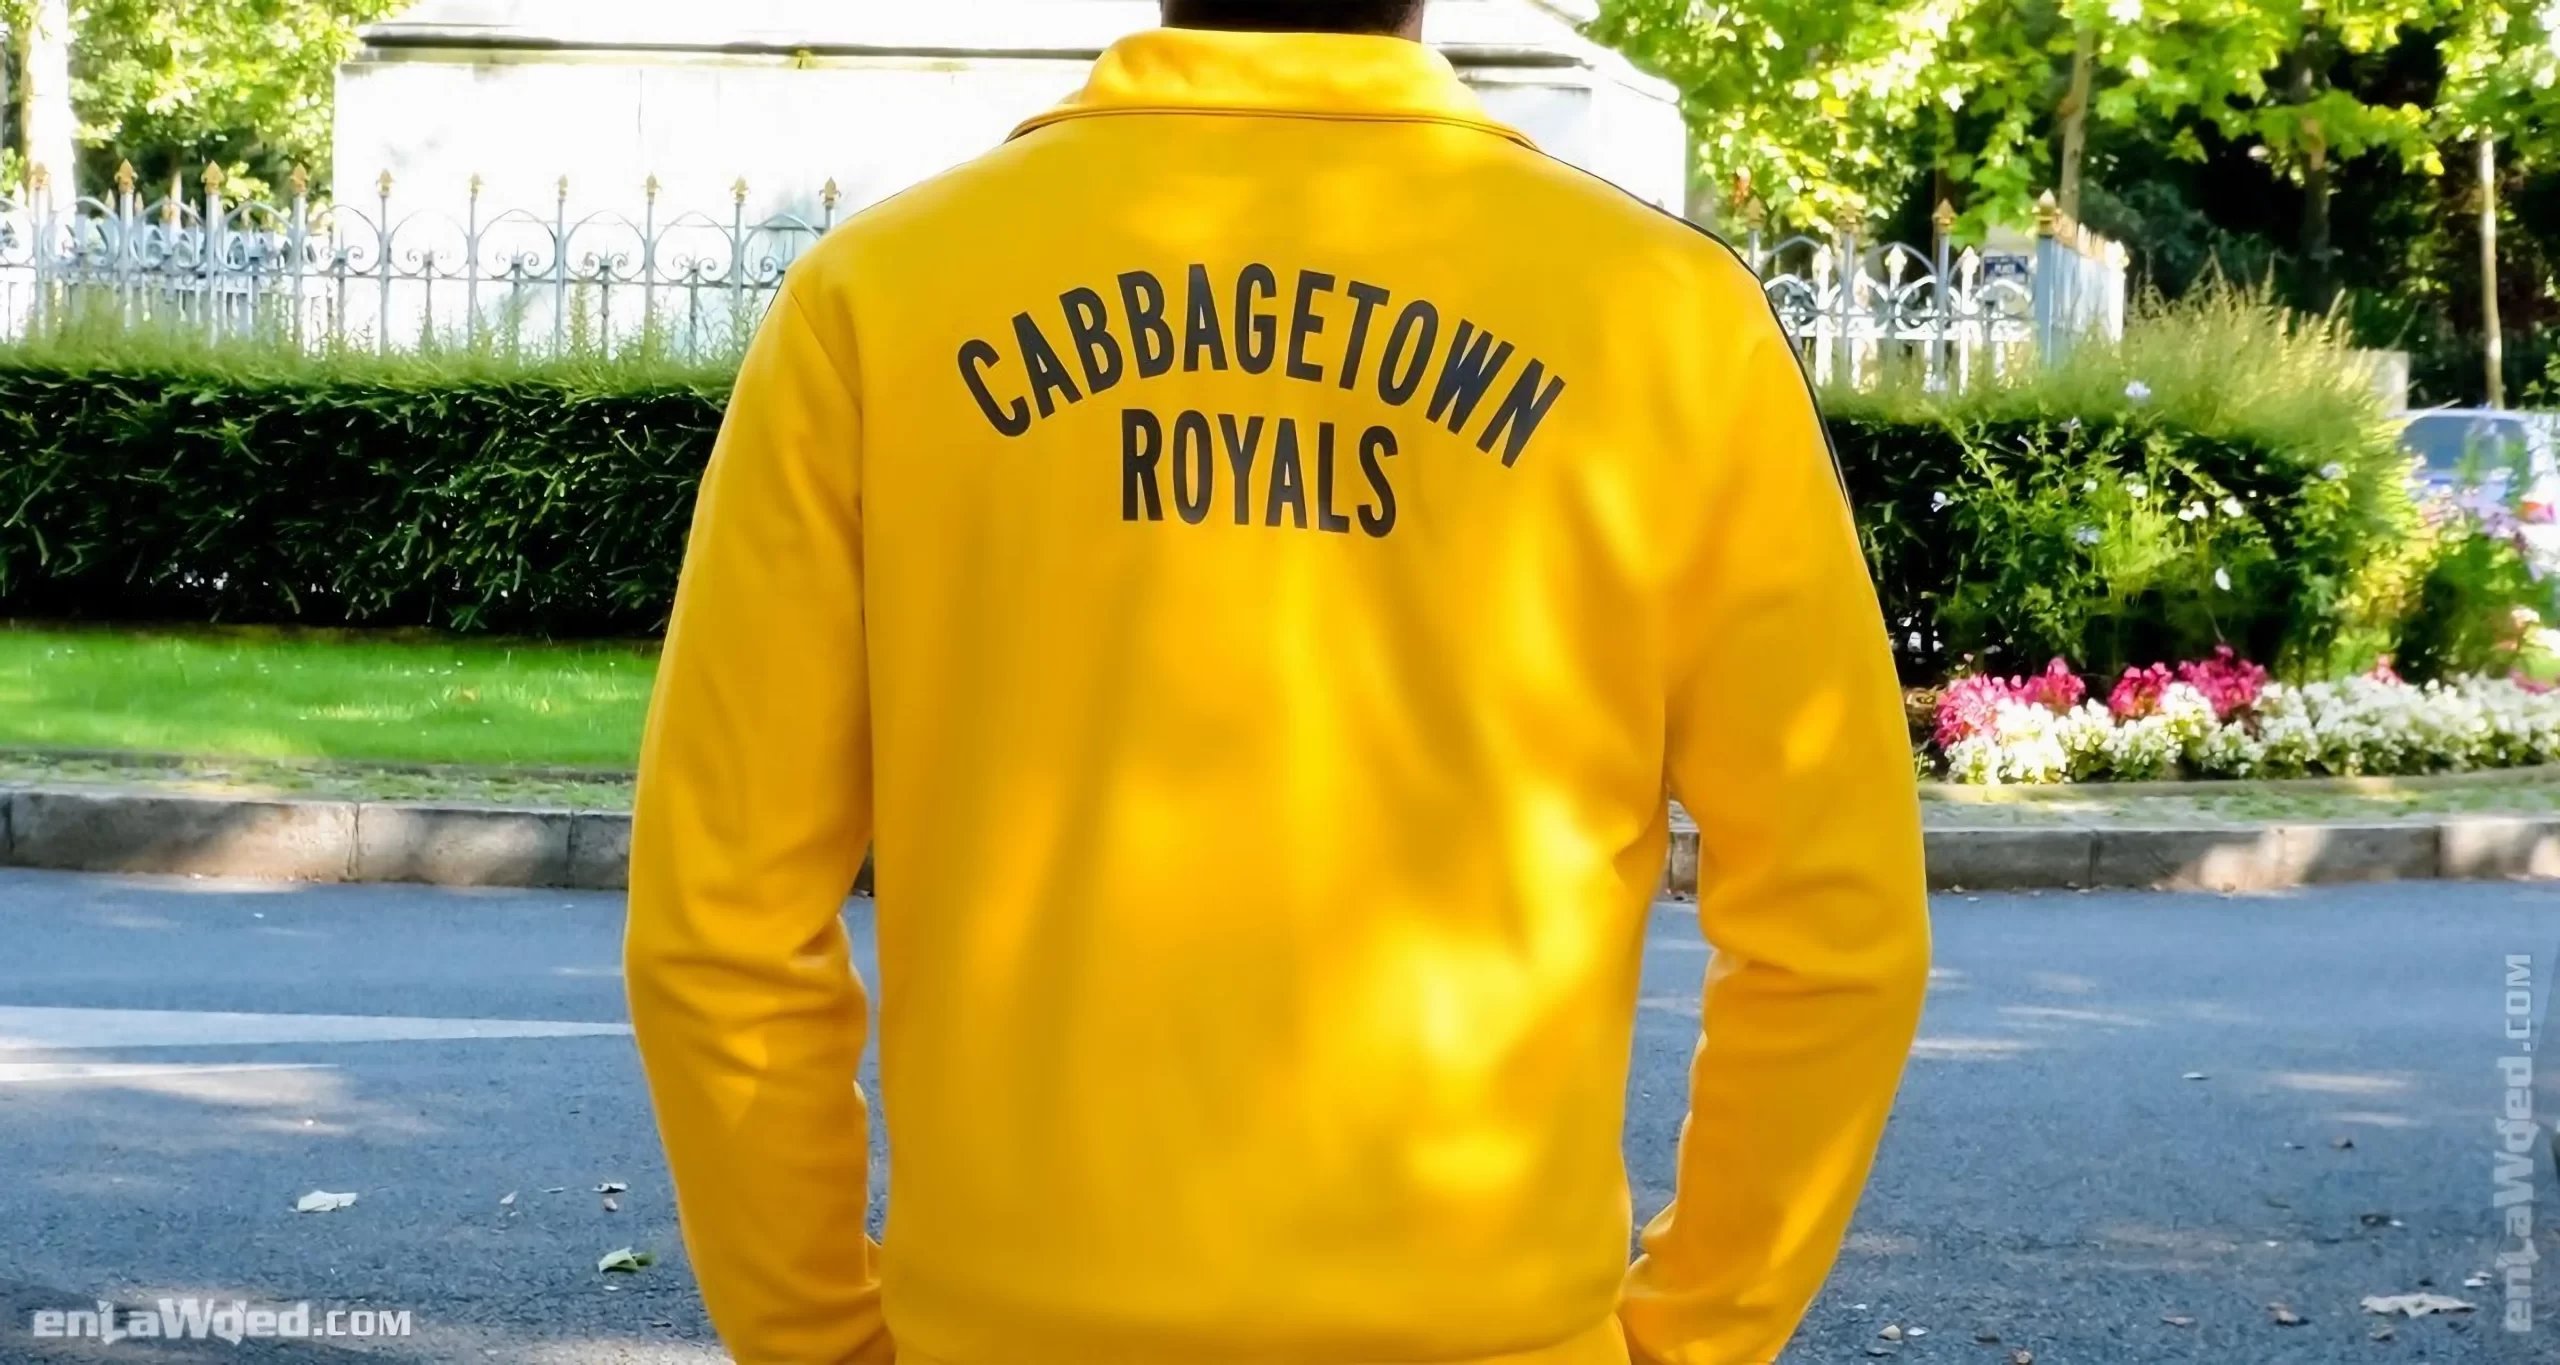 Men’s 2004 Cabbagetown Royals TT by Adidas Originals: Exclusive (EnLawded.com file #lmcgesch4082fh7f2su)